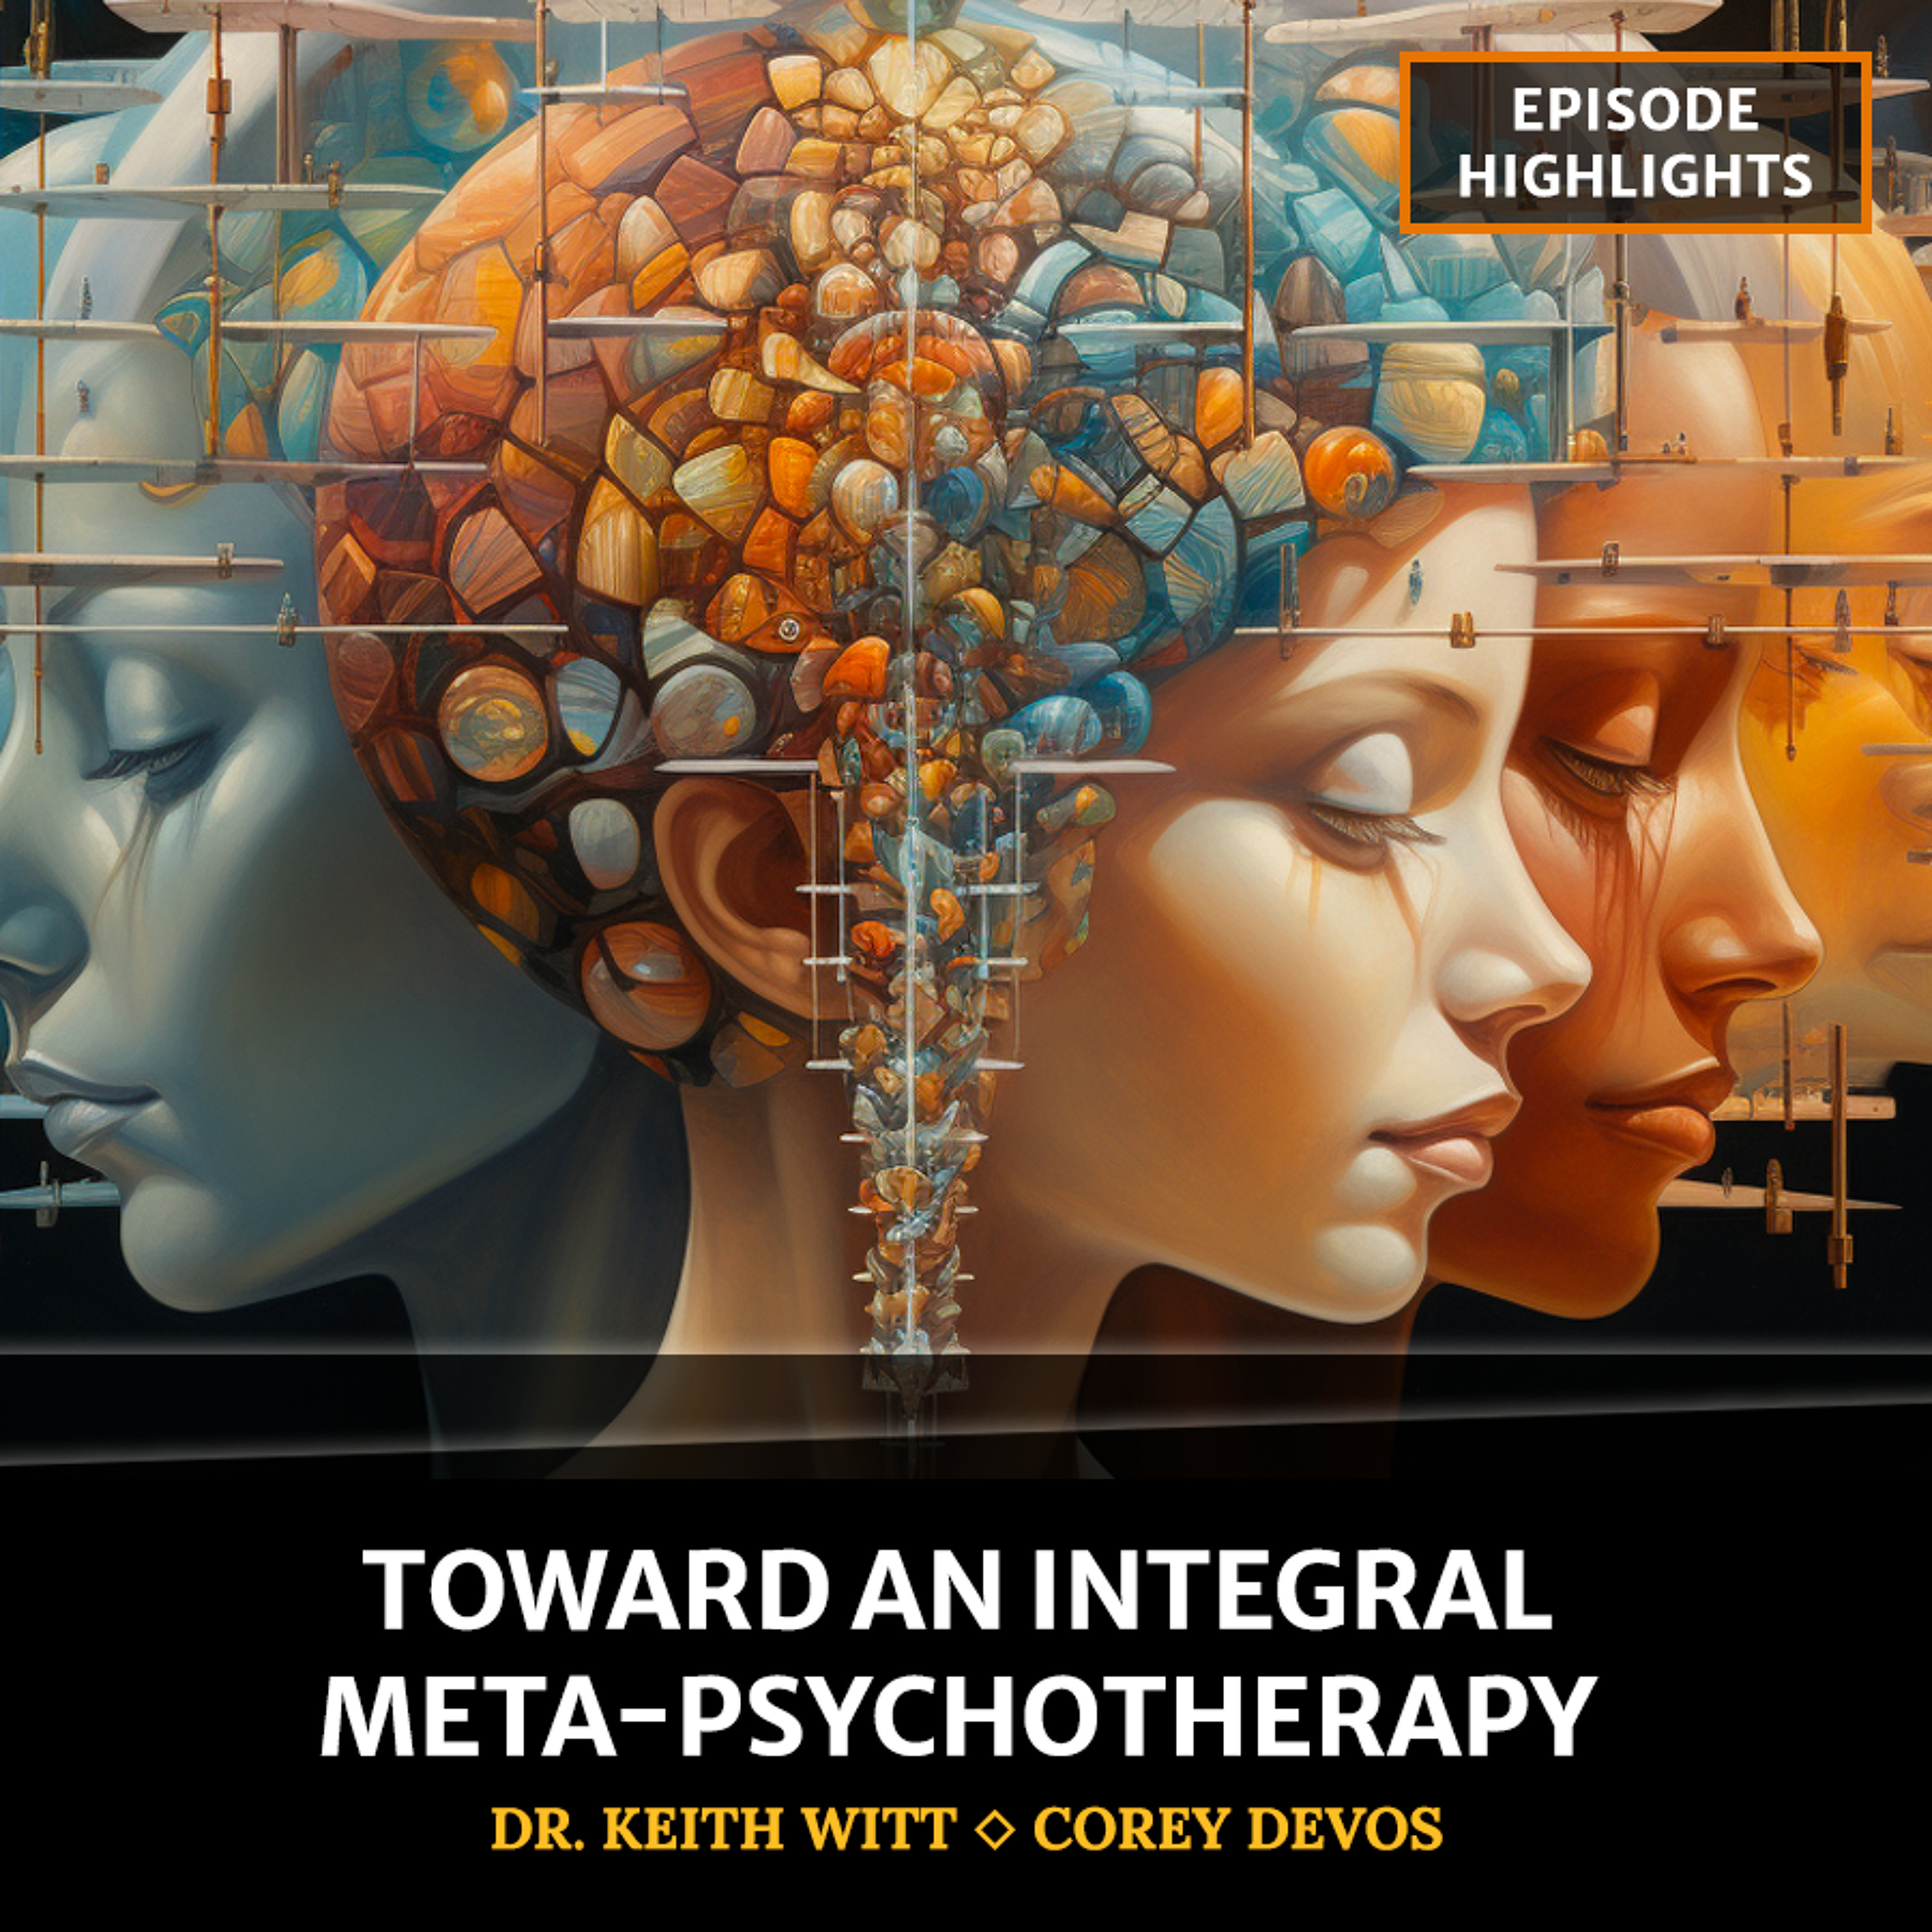 Toward an Integral Meta-Psychotherapy [HIGHLIGHTS]